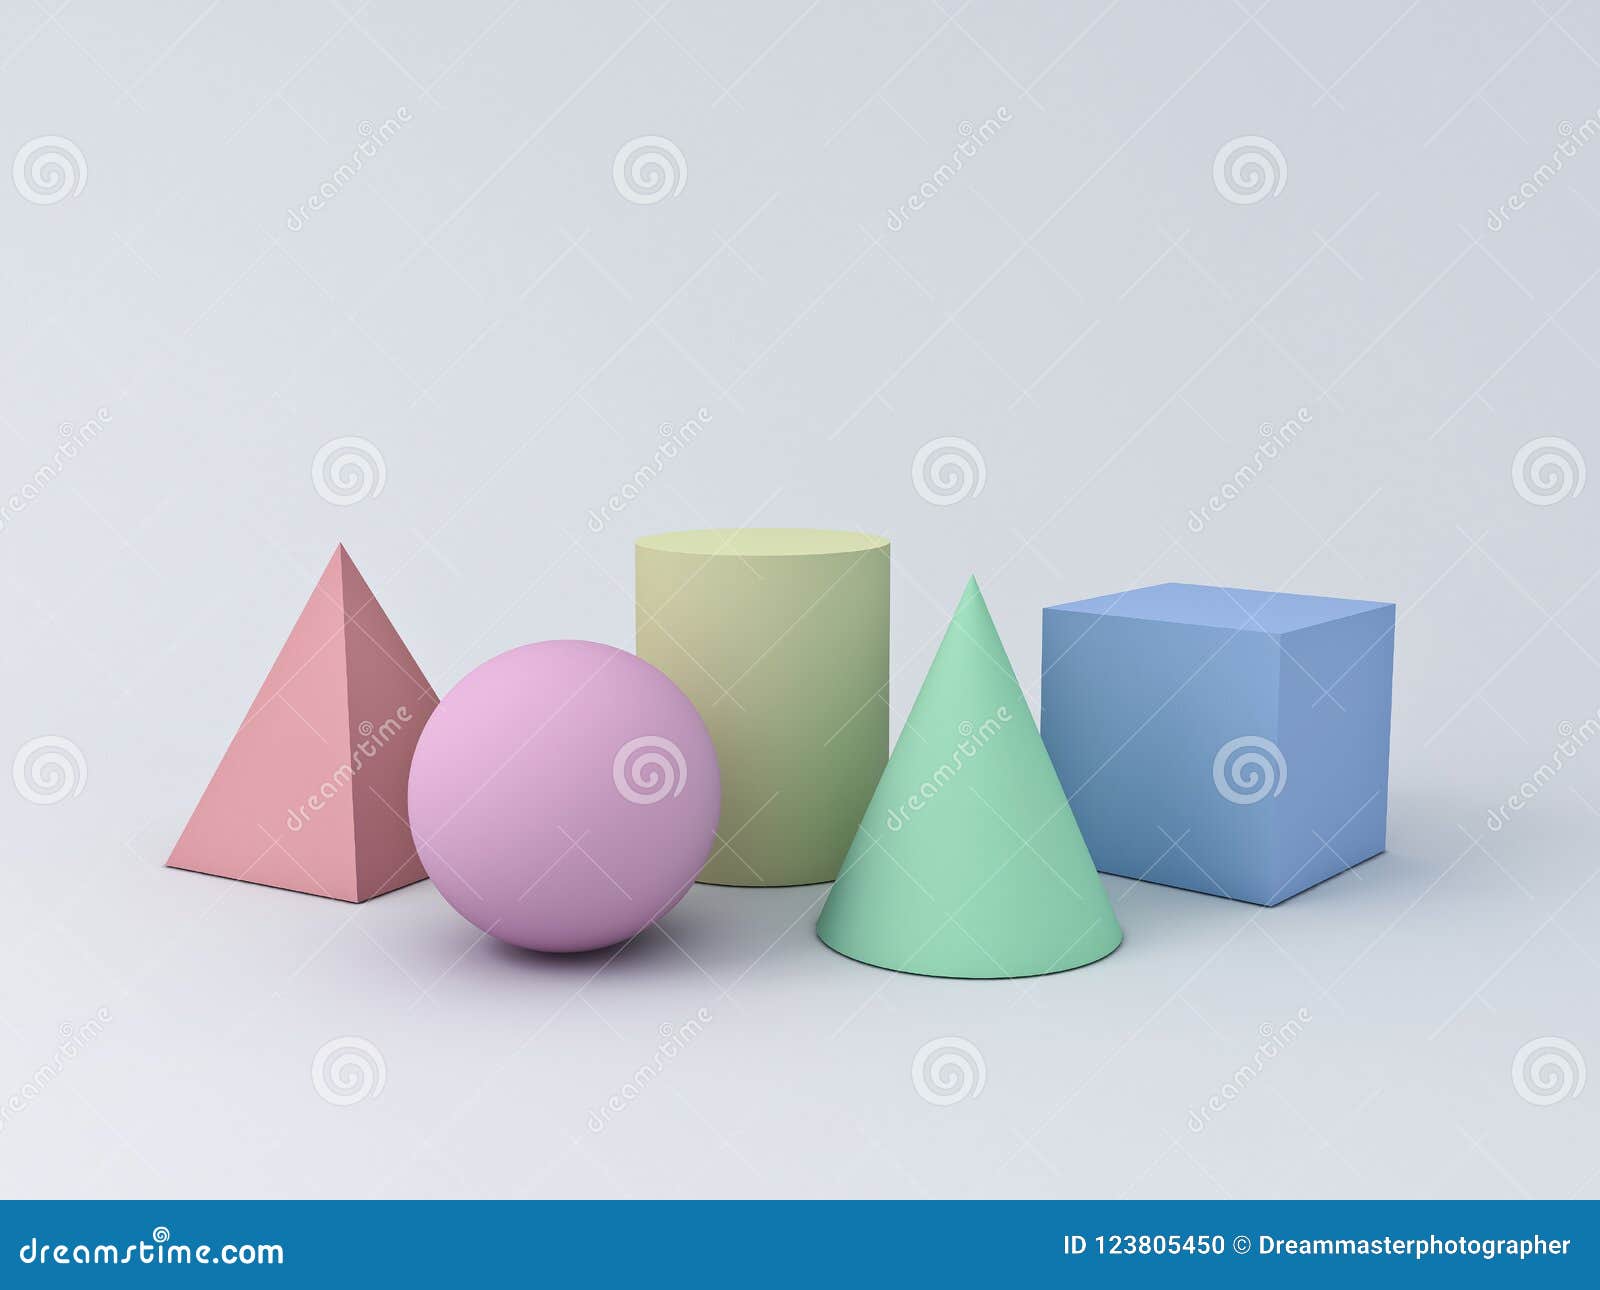 Сфера цилиндр куб конус пирамида. First model.3dm куб конус цилиндр сфера. Призма конус куб шар. Объемные геометрические фигуры шар. Геометрические фигуры куб цилиндр.